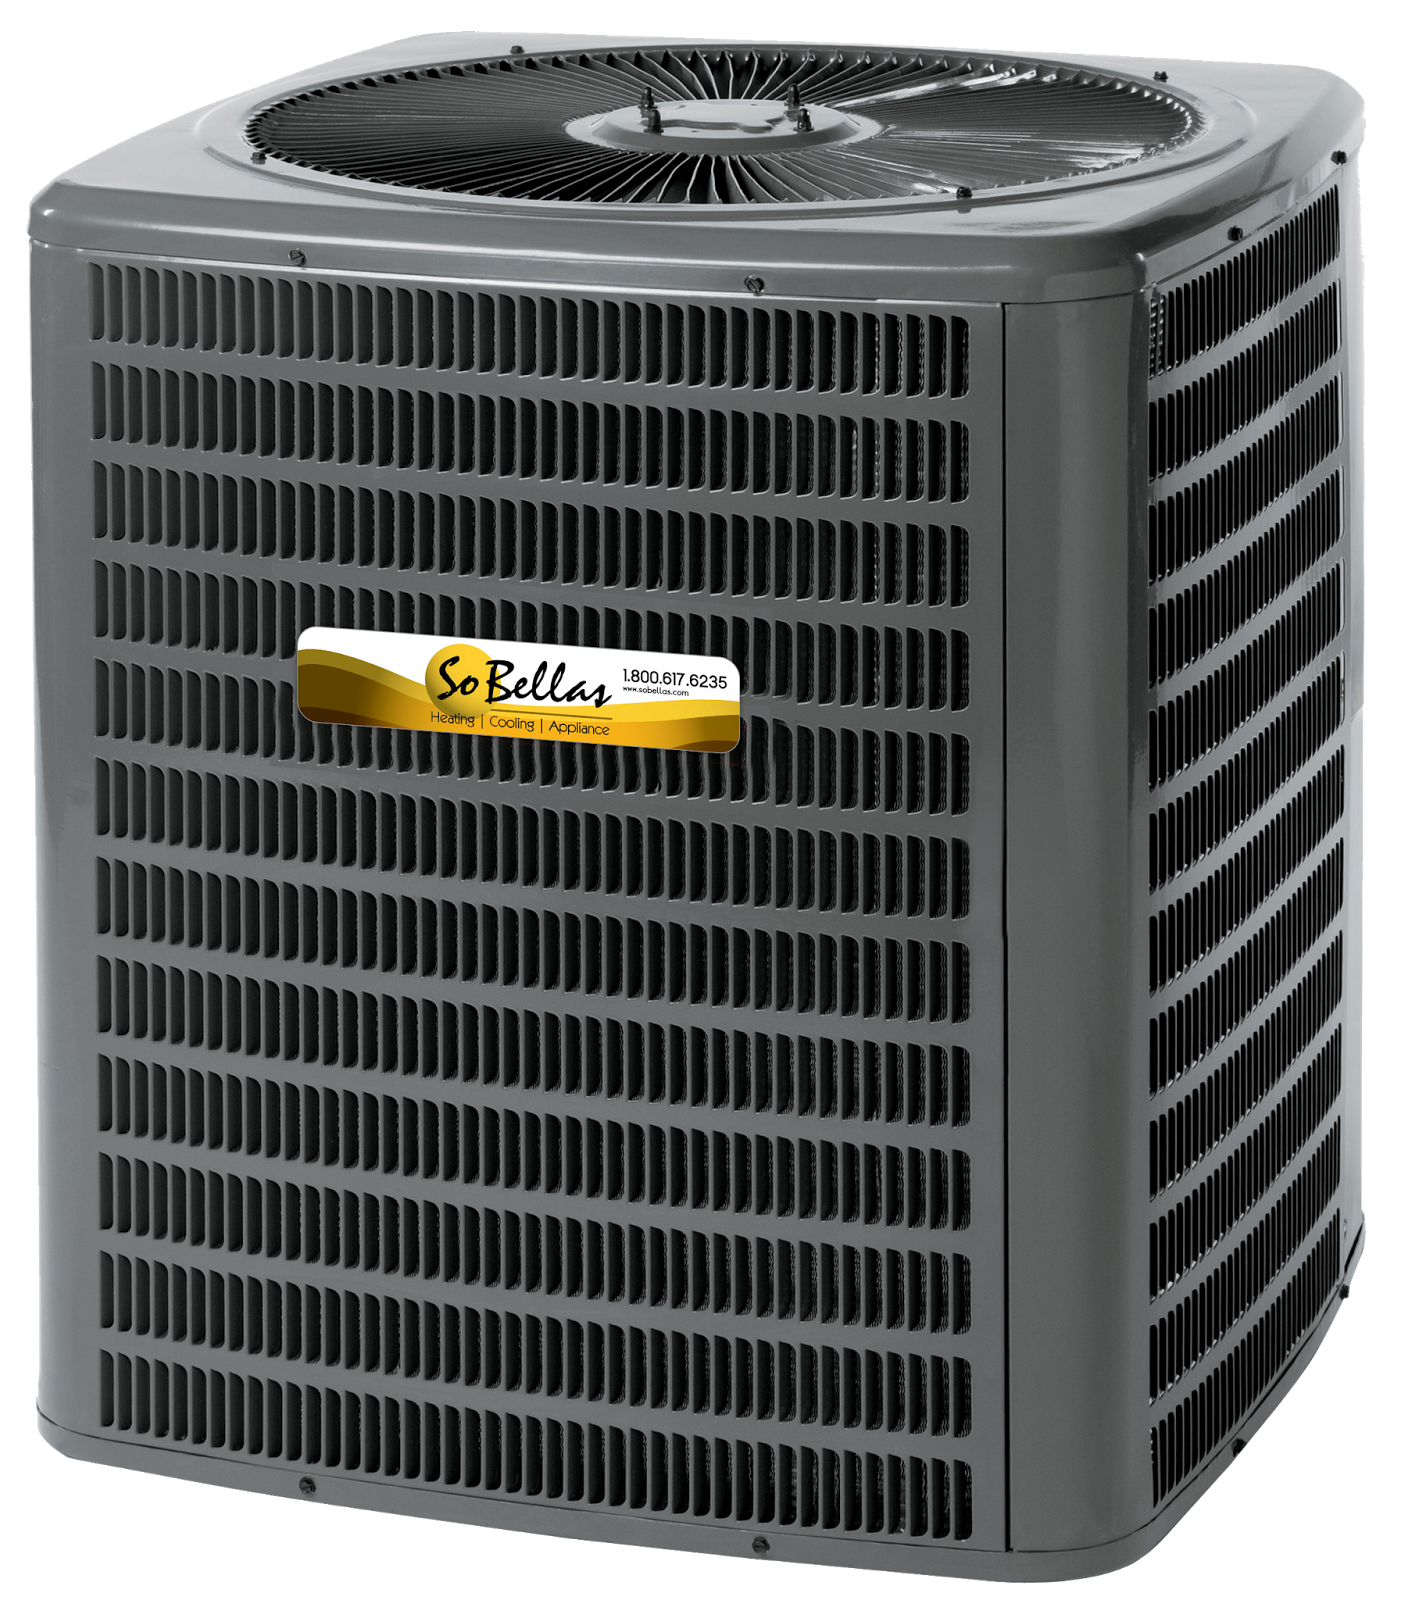 el-paso-air-conditioning-repair-tis-the-season-for-air-conditioning